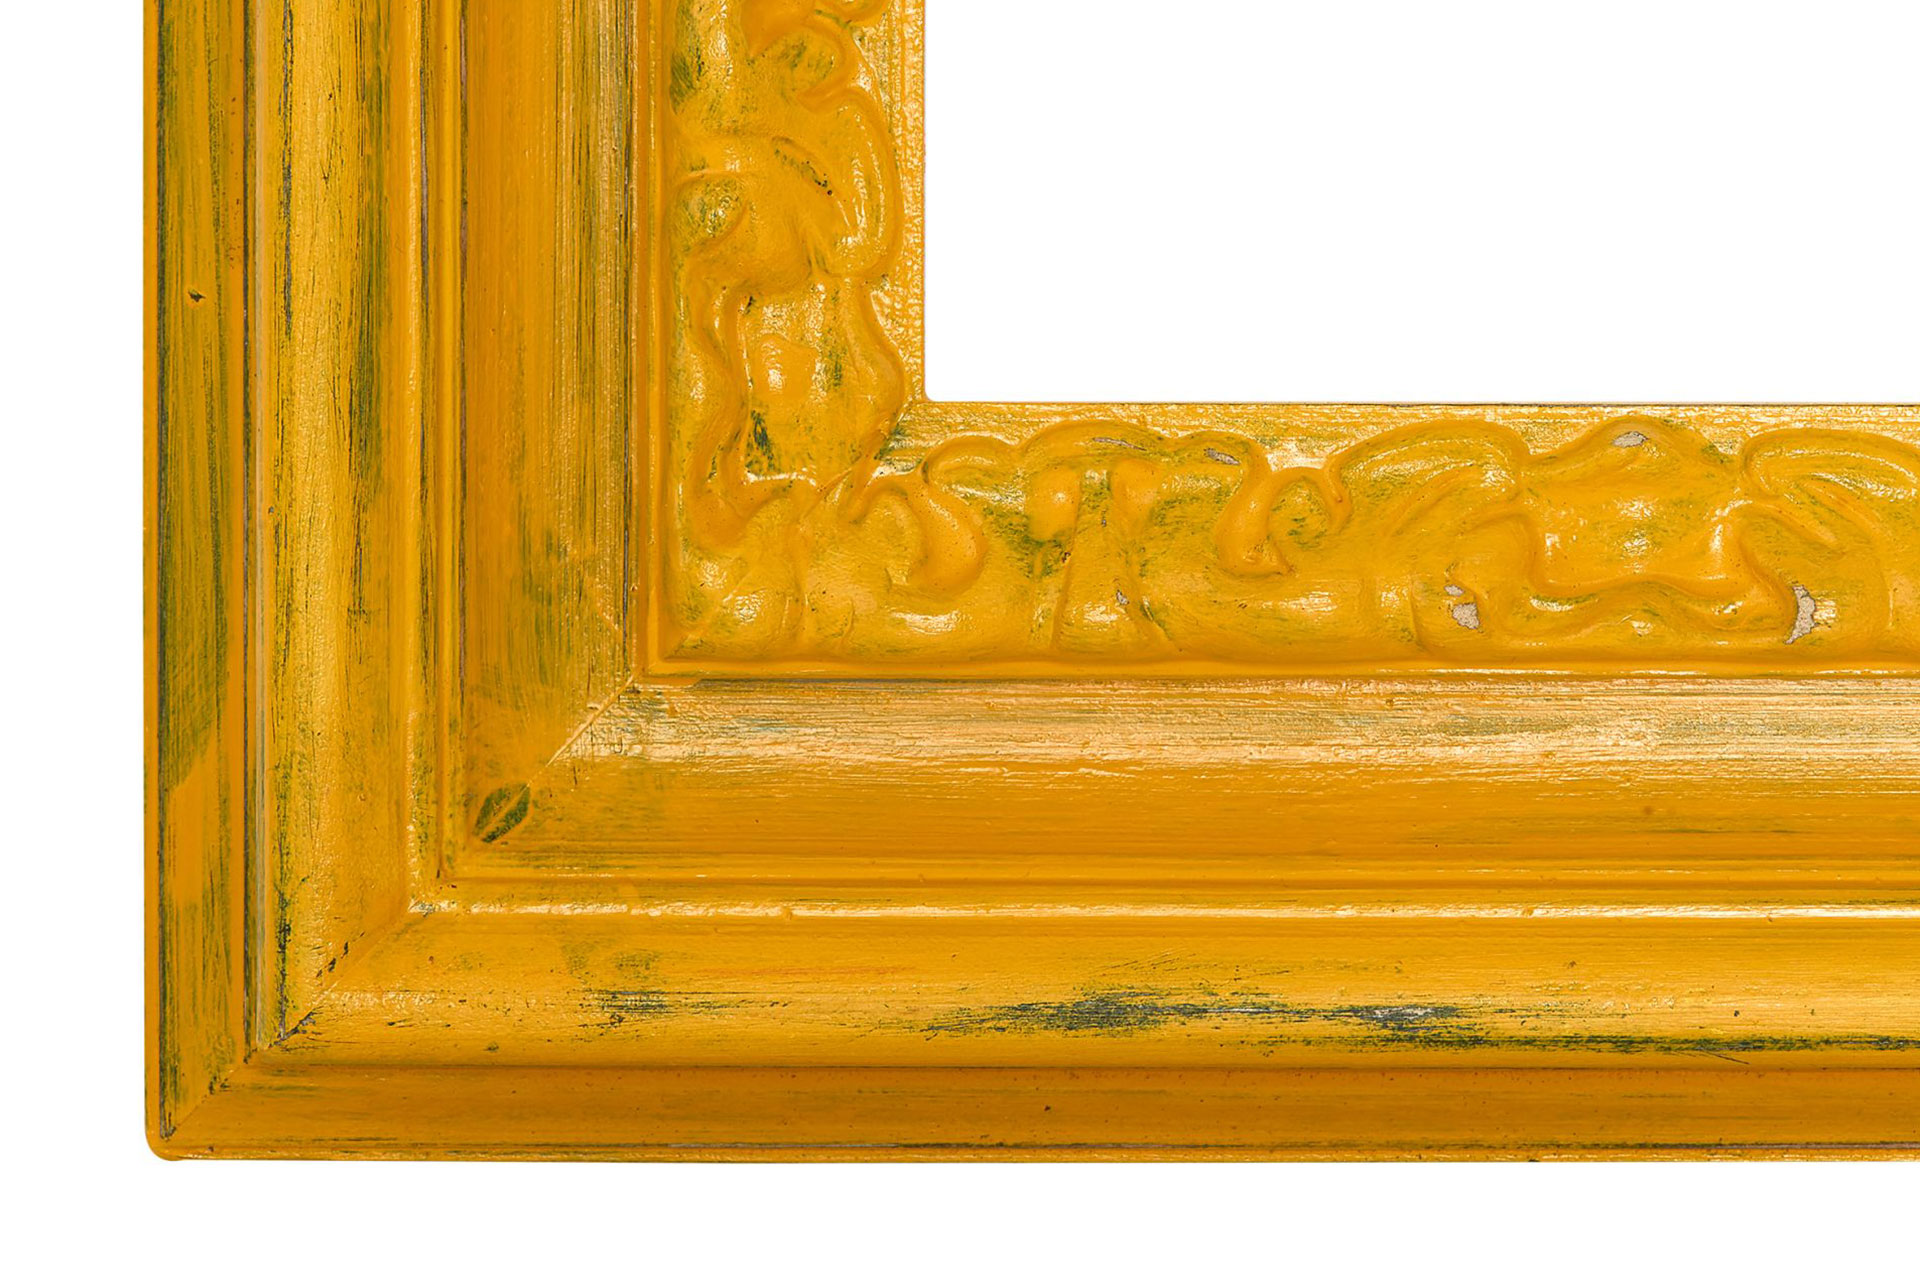 Modell Montpellier, rechteckig, Design/Farbe: Braun/Gelb, Herstellung: ASR-Rahmendesign, Material: Holz, Facettenspiegel, Style: modern, Ansicht Ausschnitt Ecke